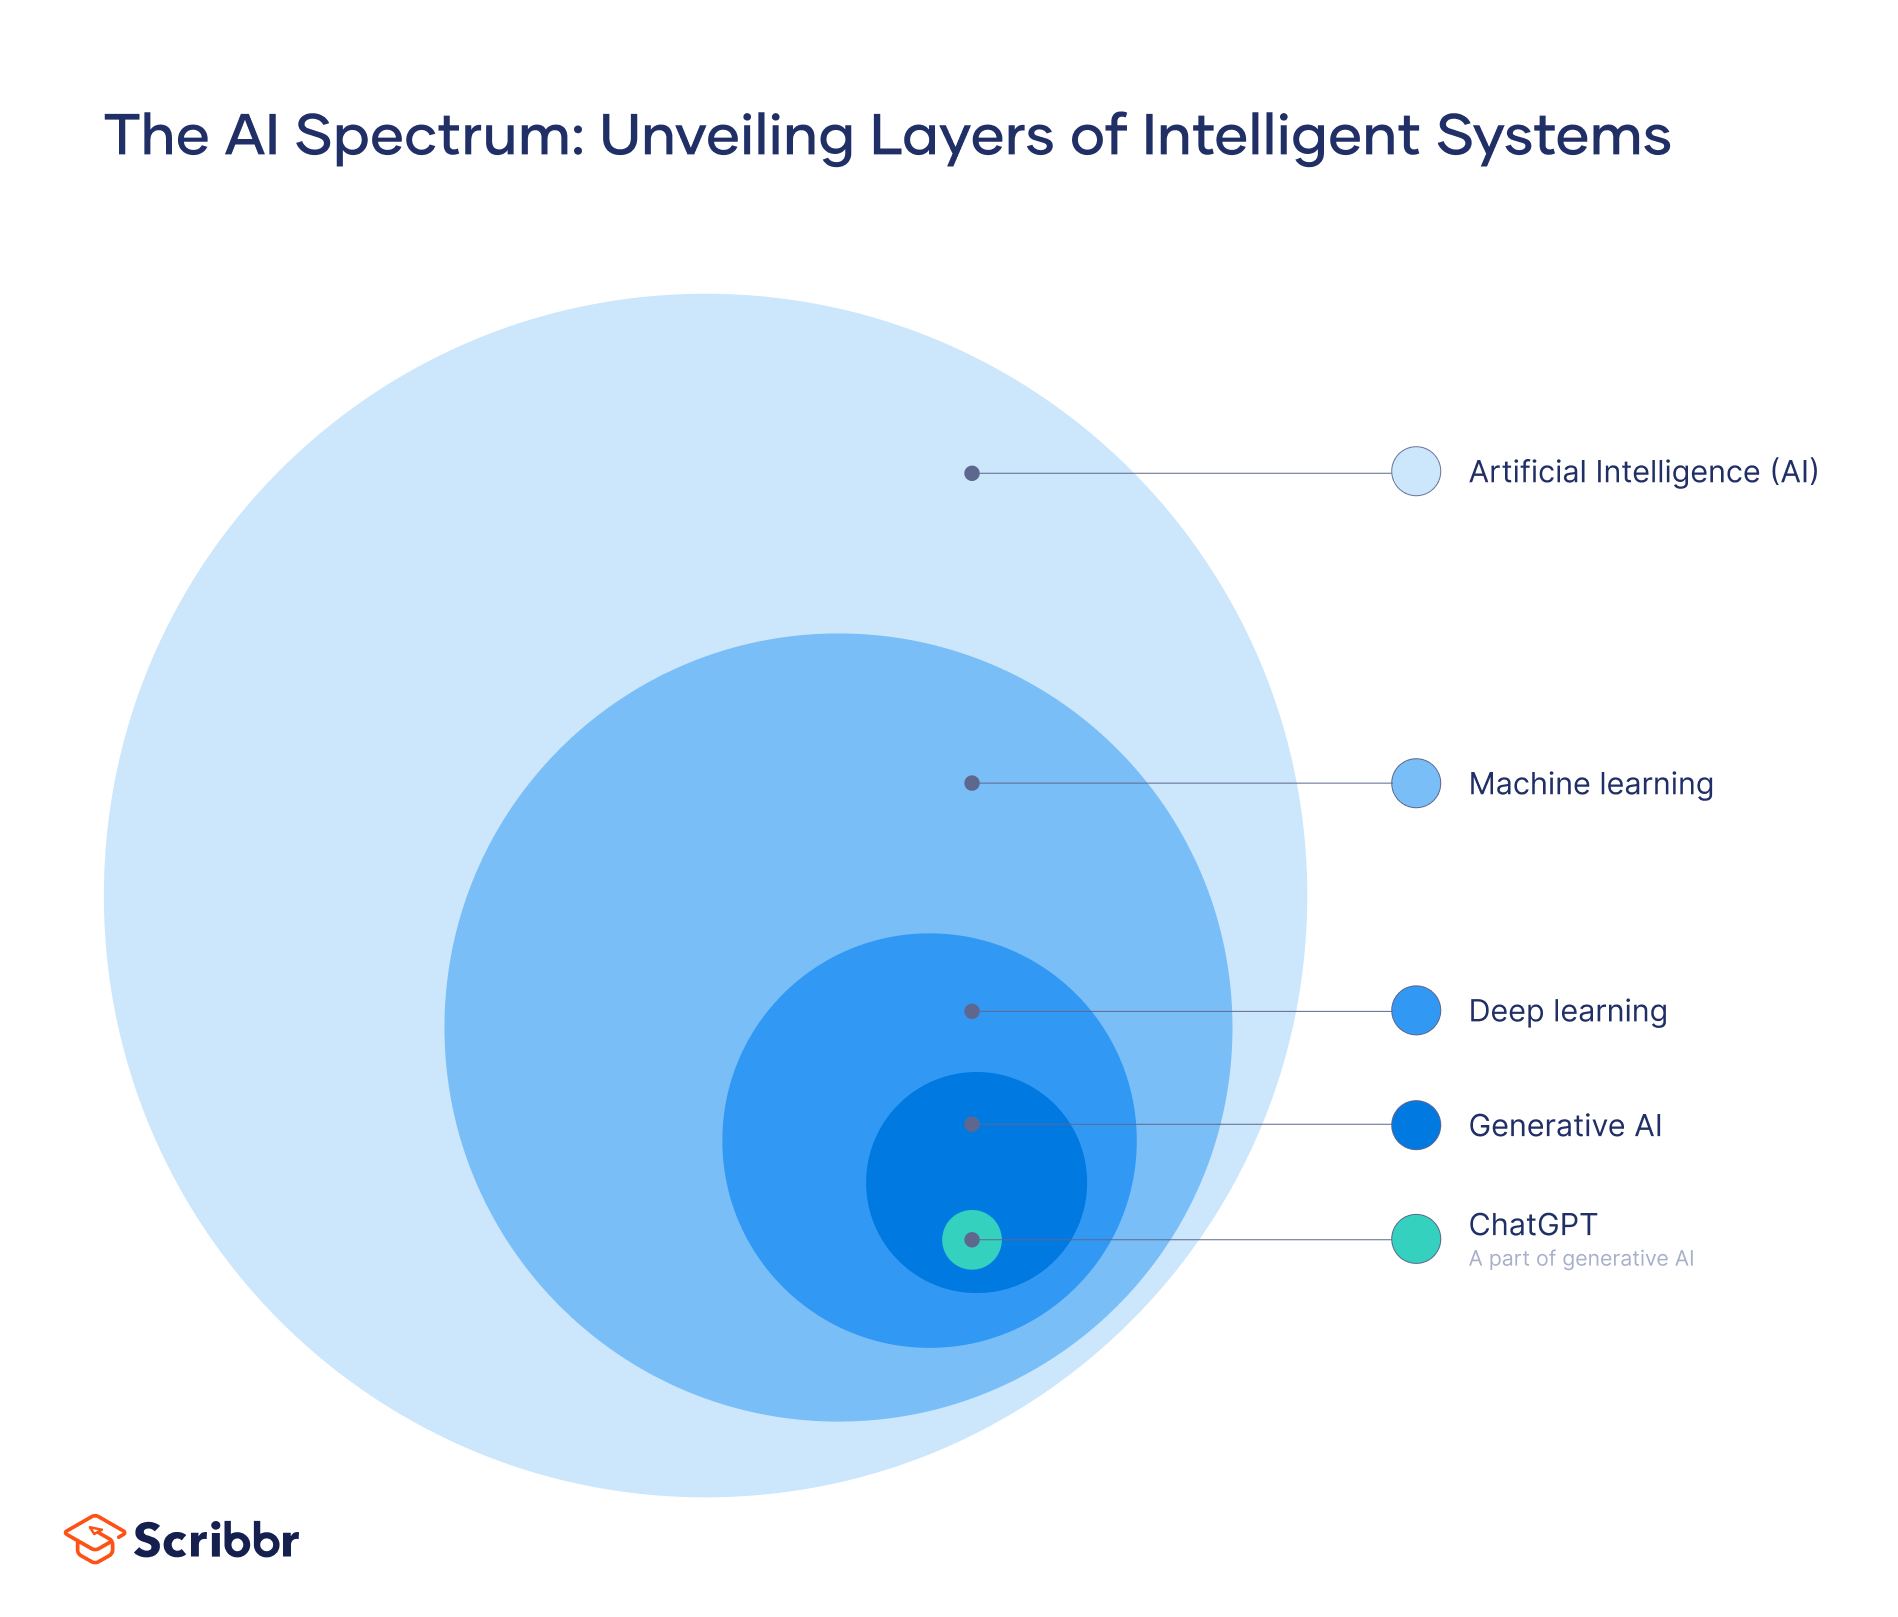 Conceptual framework of AI, machine learning, deep learning and generative AI